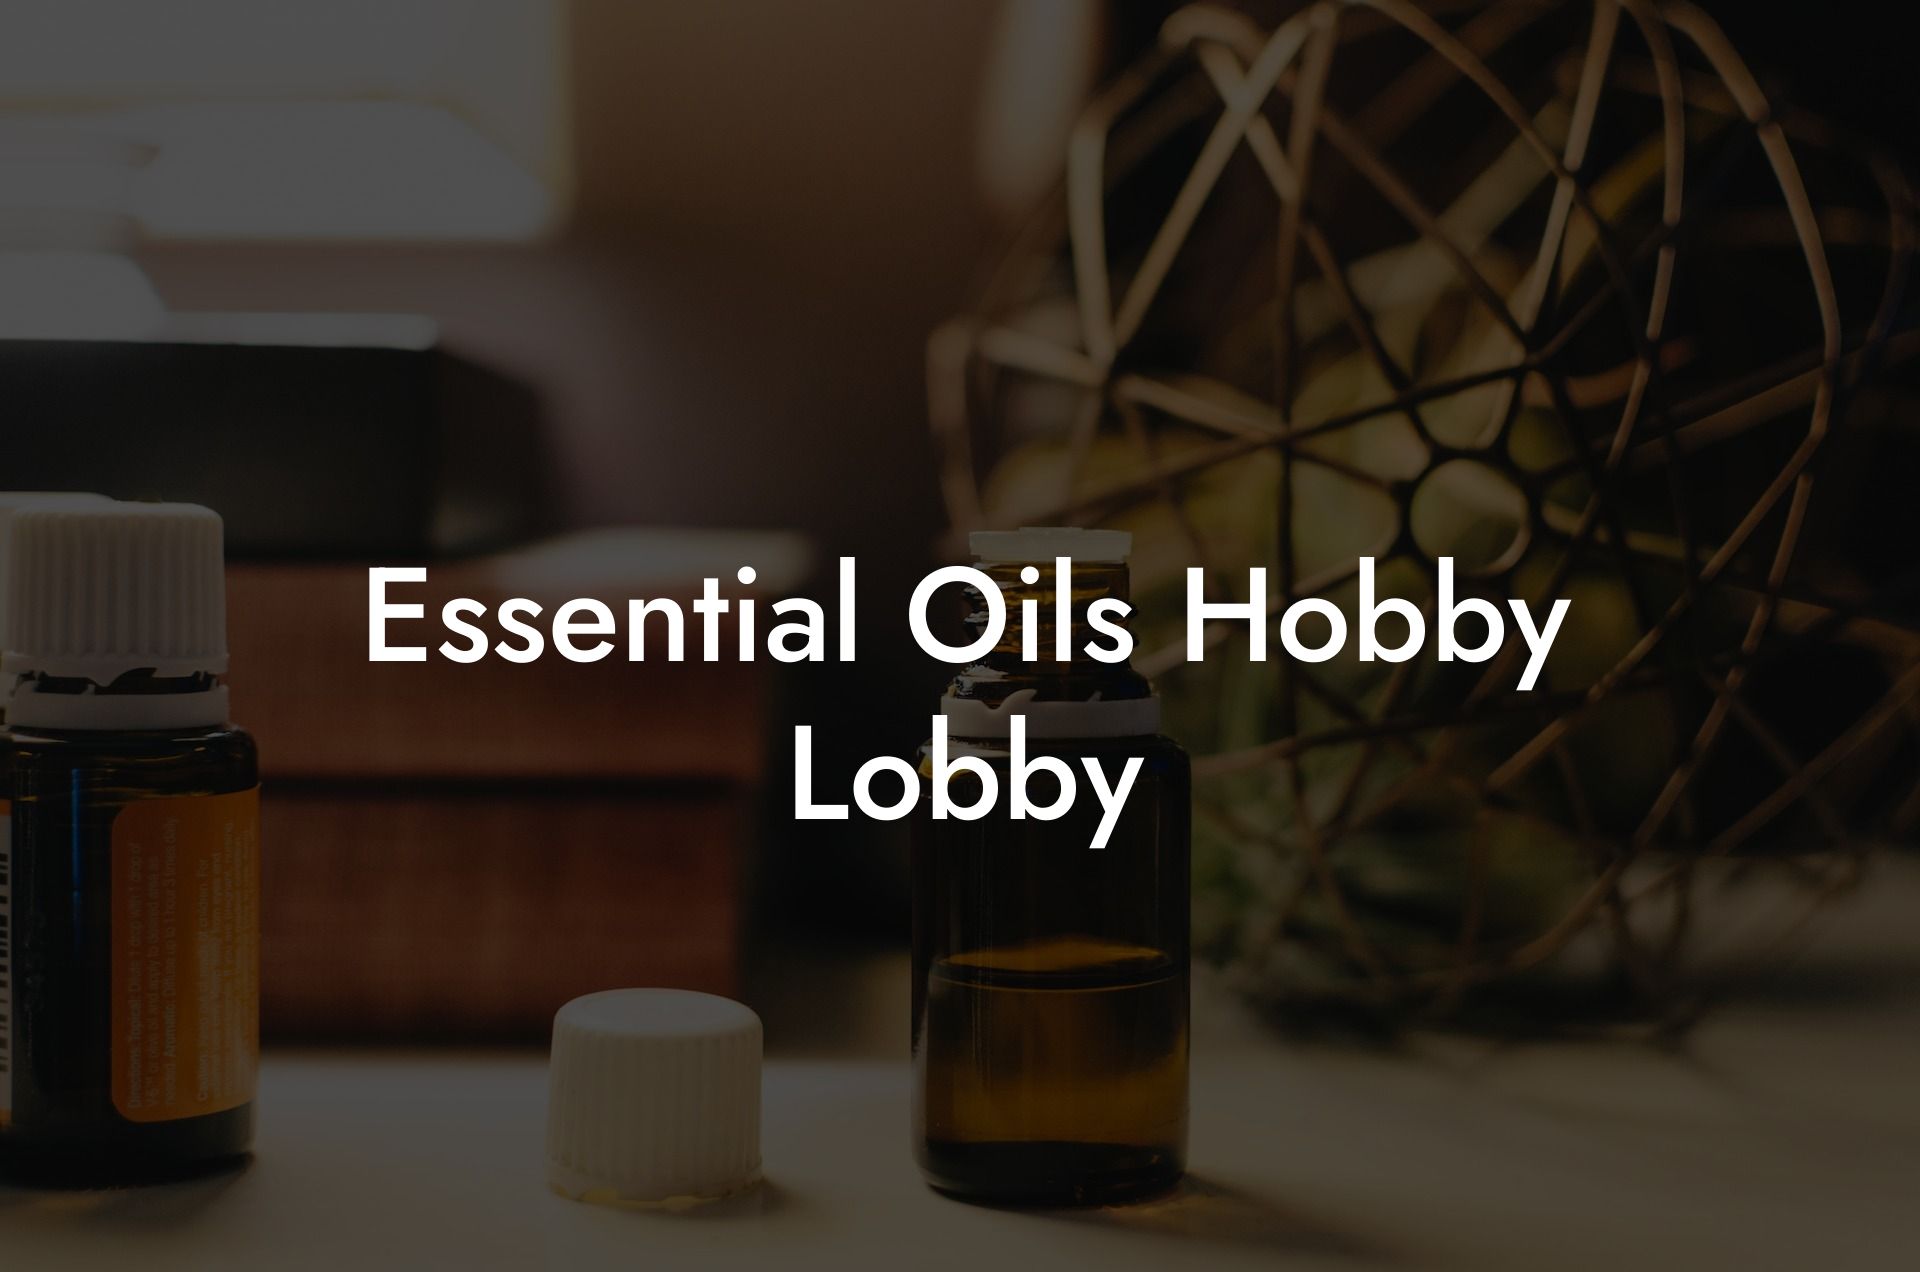 Essential Oils Hobby Lobby